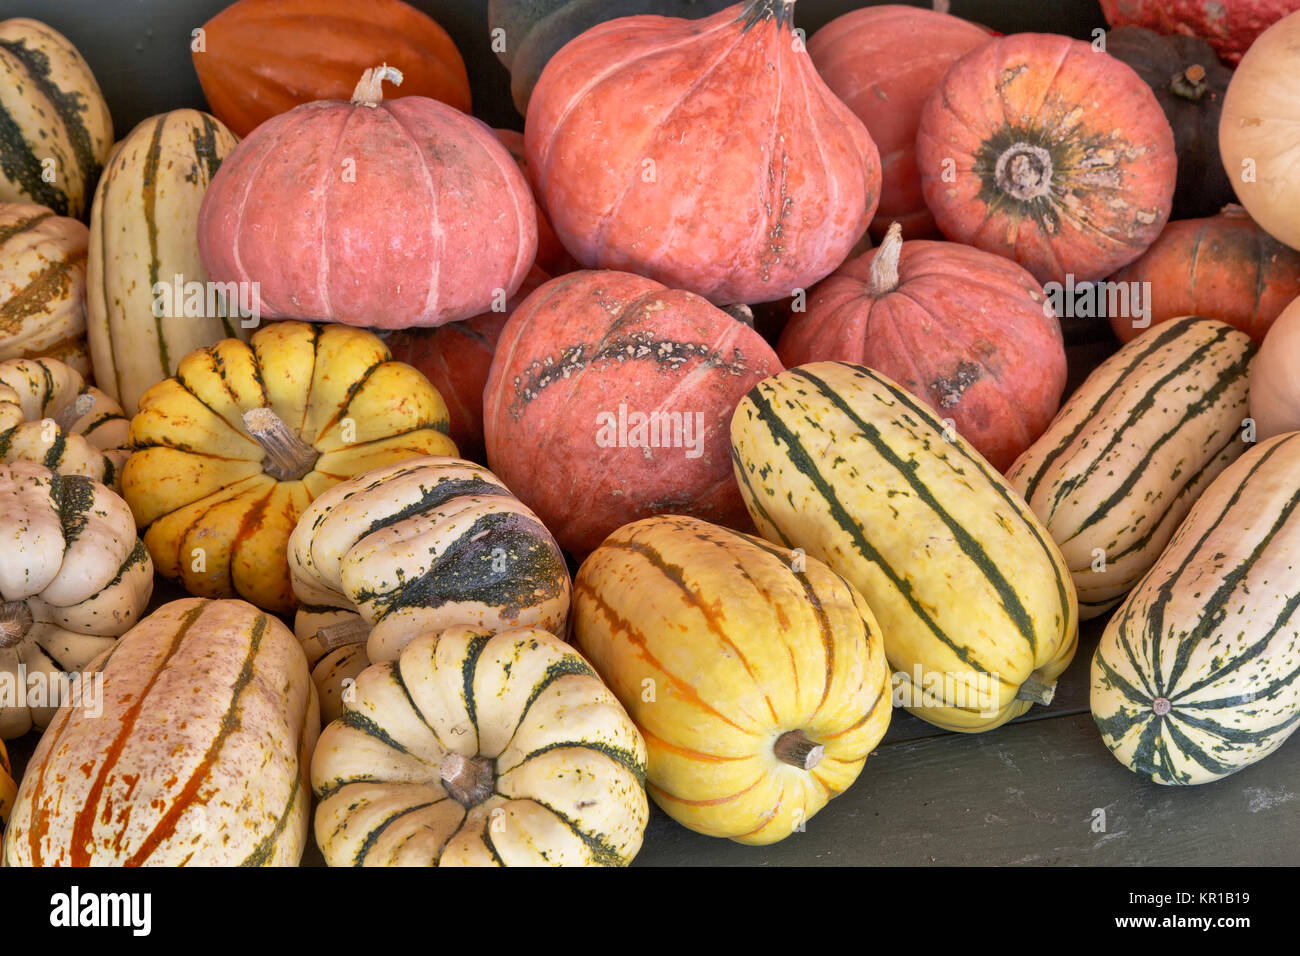 Several varieties of harvested winter squash, Carnival, Sweet Dumpling, Gold Nugget & Delicata 'Cucurbita pepo'. Stock Photo